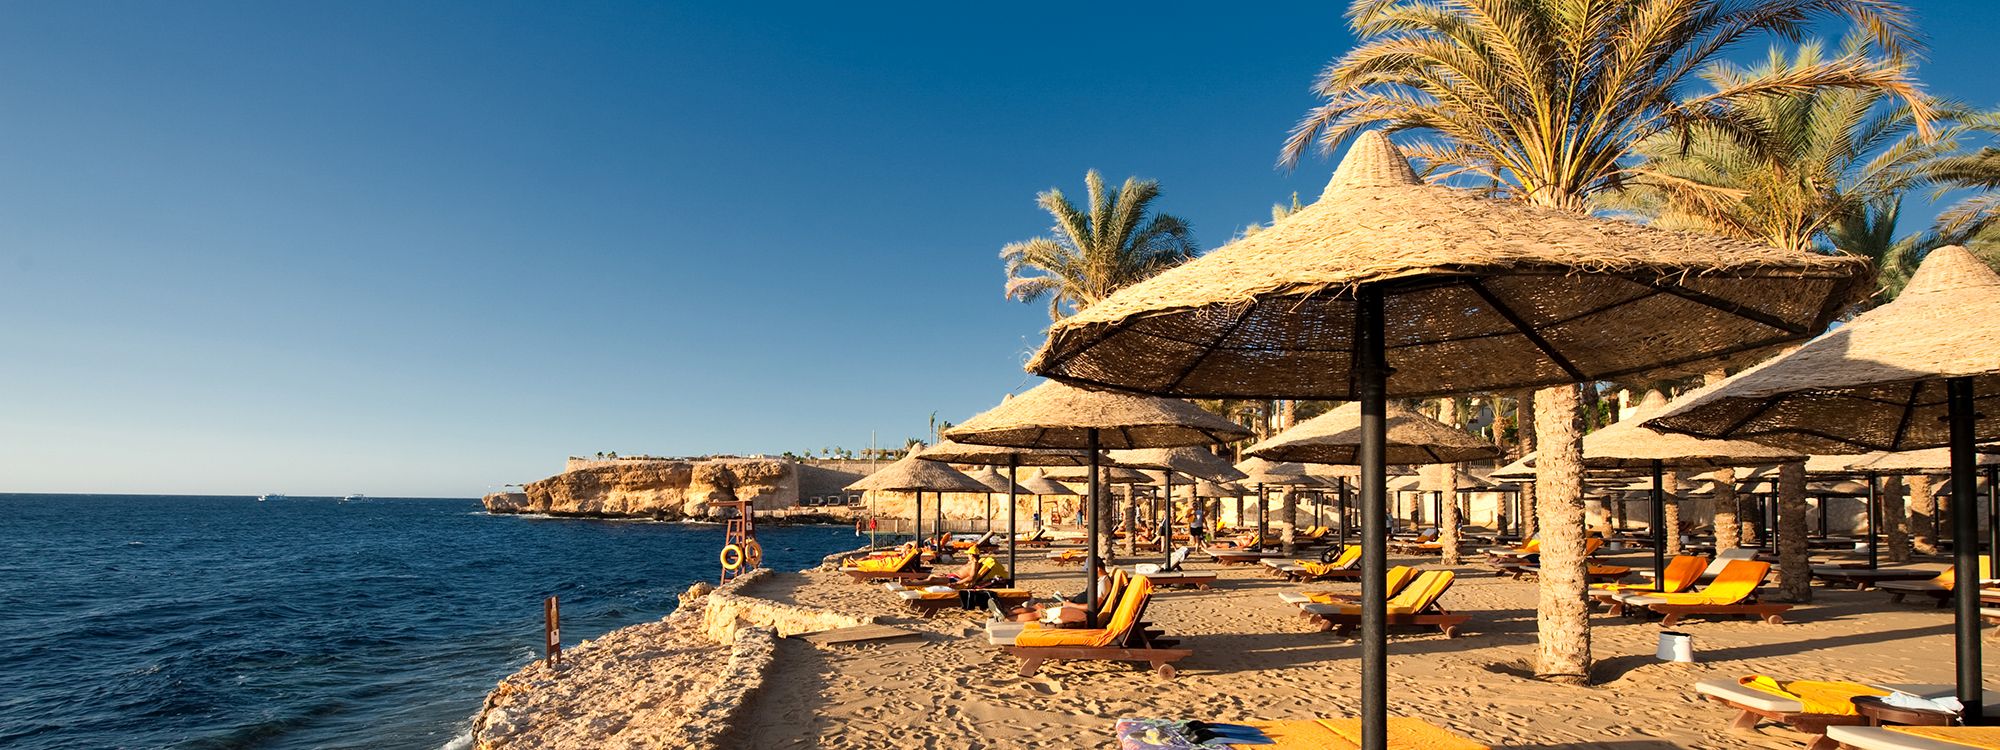 Der Strand vor dem Grand Hotel Sharm El Sheikh